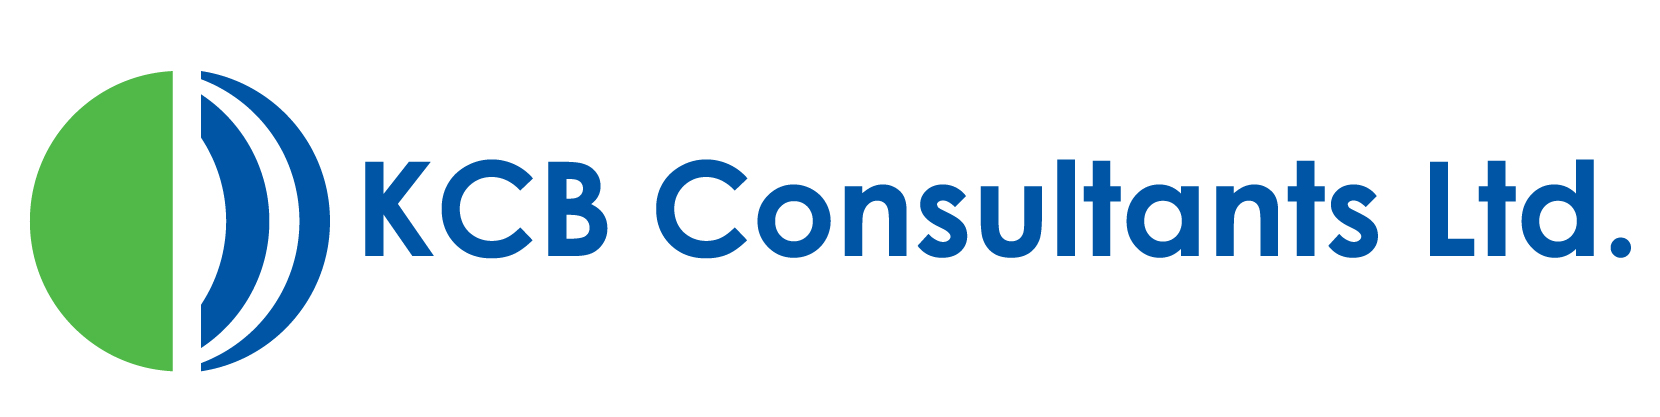 KCB Consultants Ltd logo 002